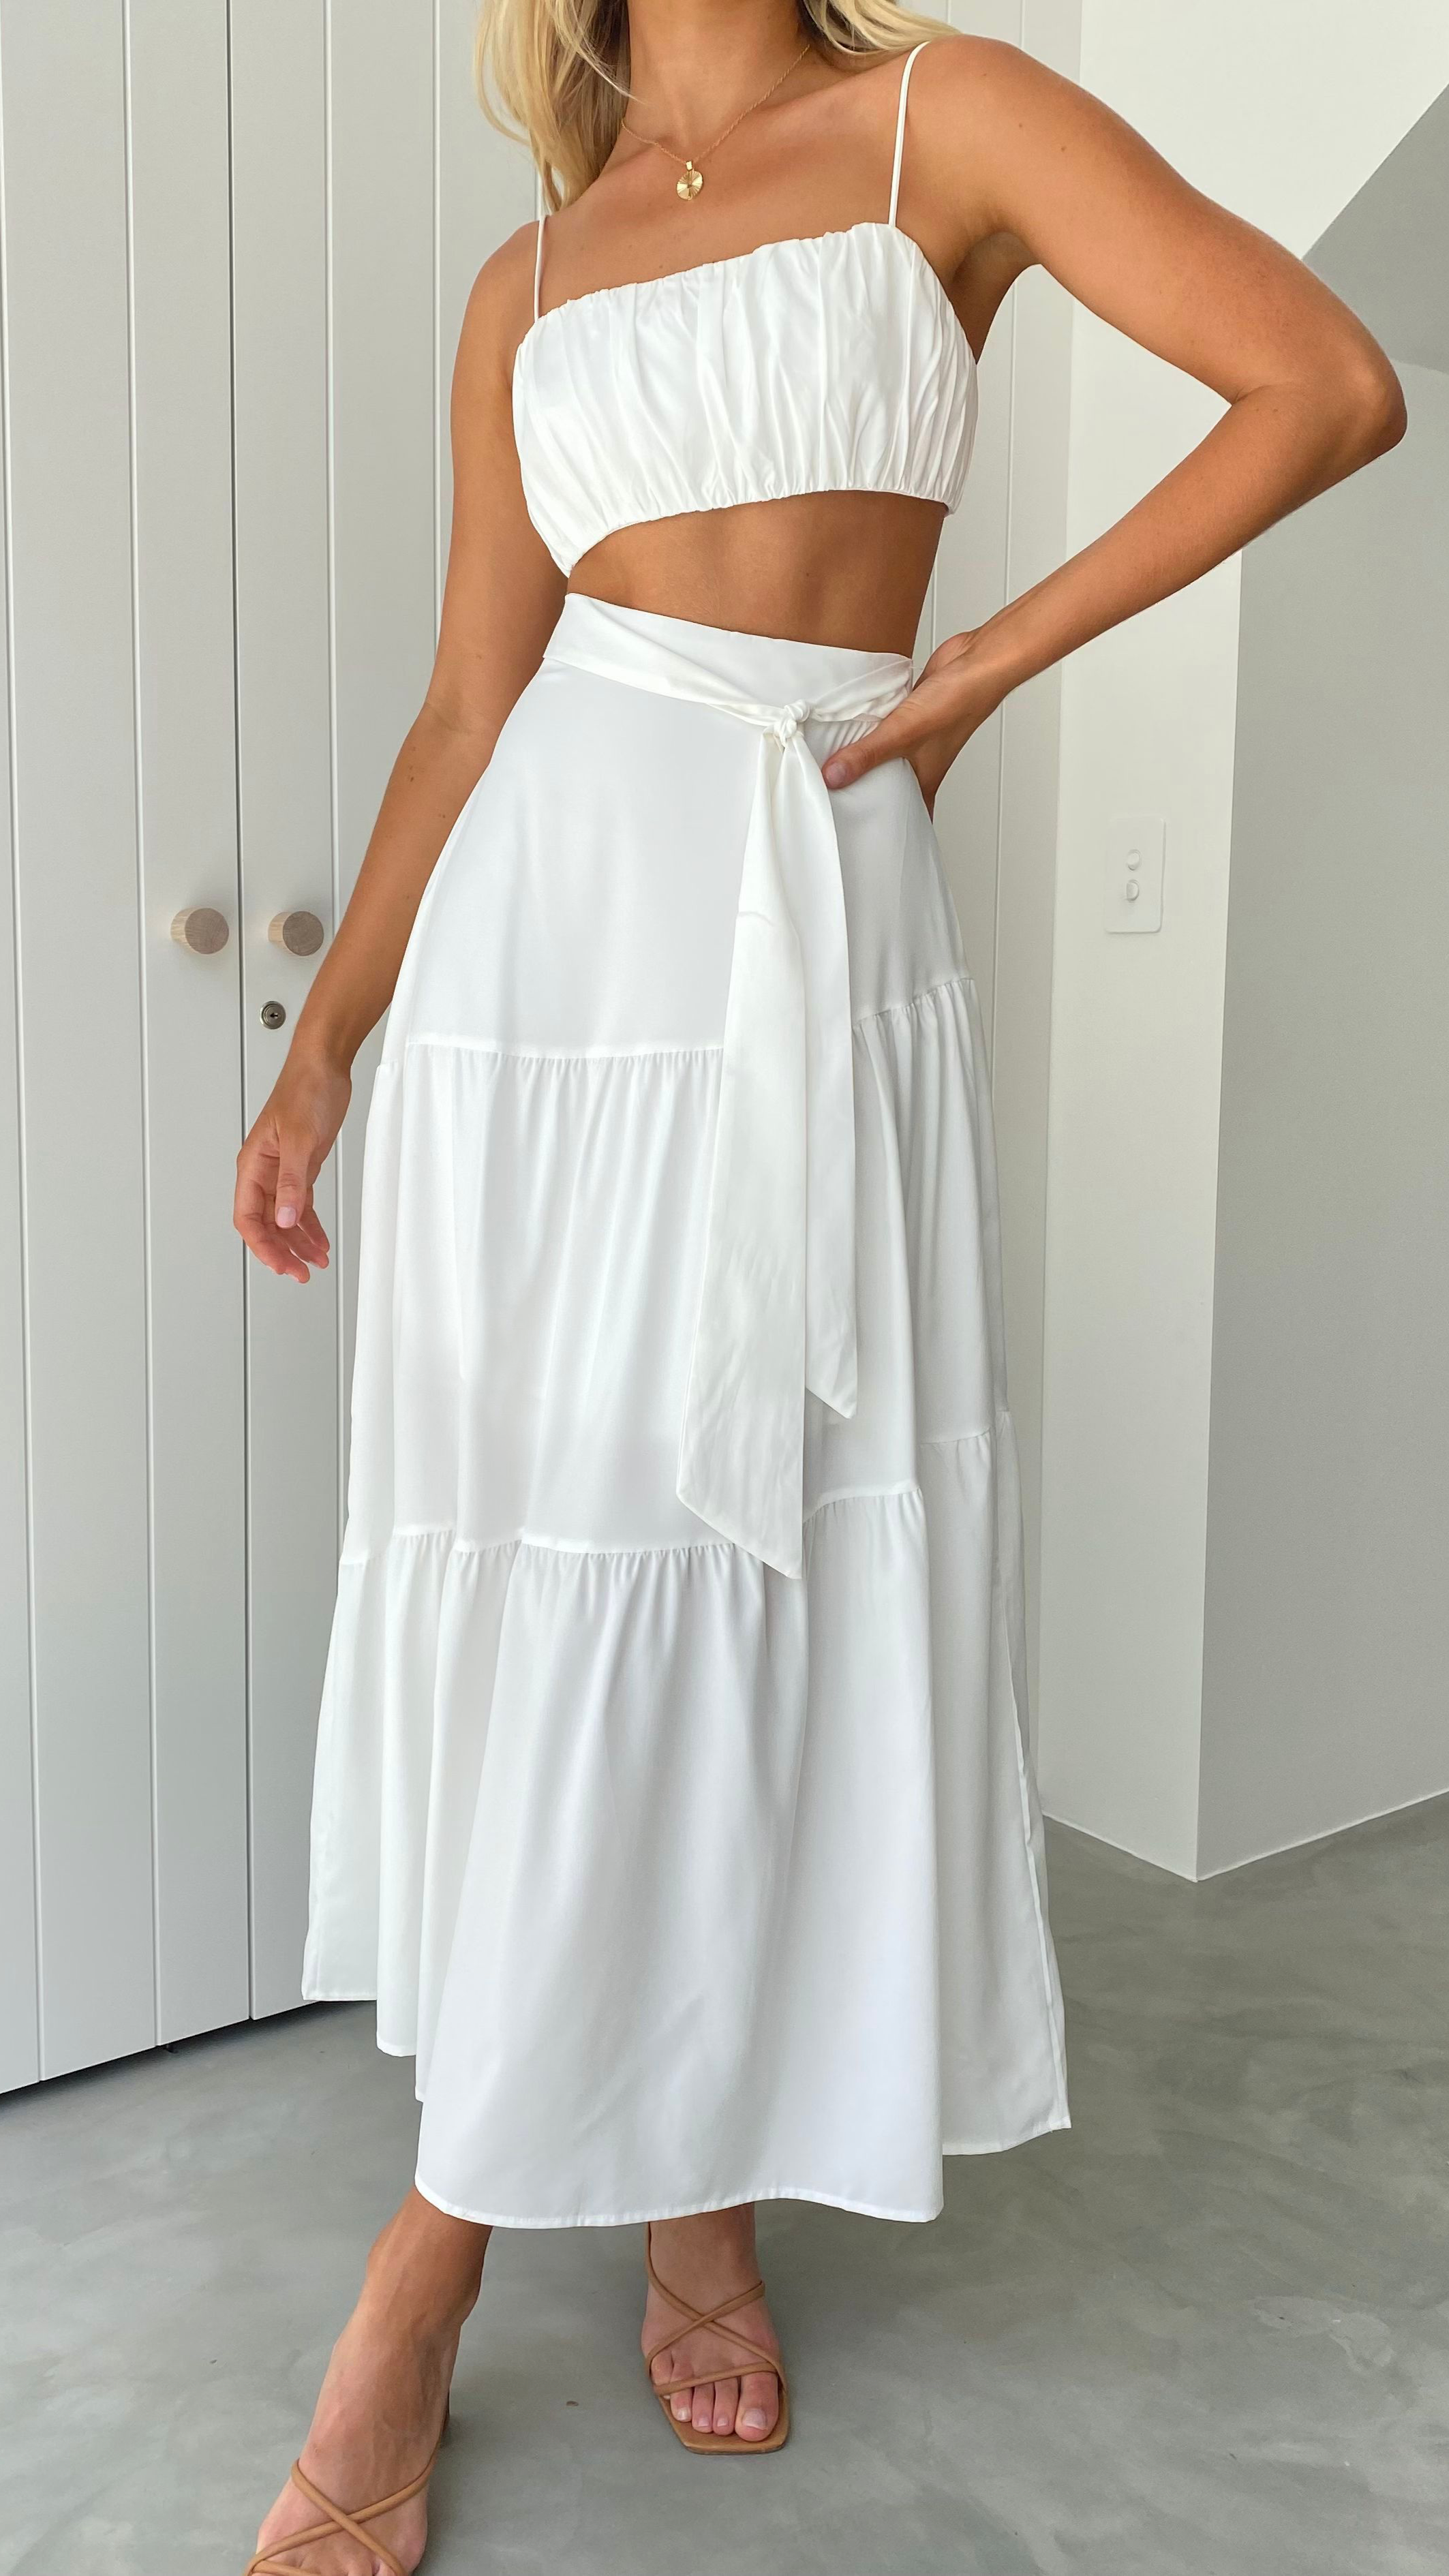 Saraya Top and Skirt Set - White